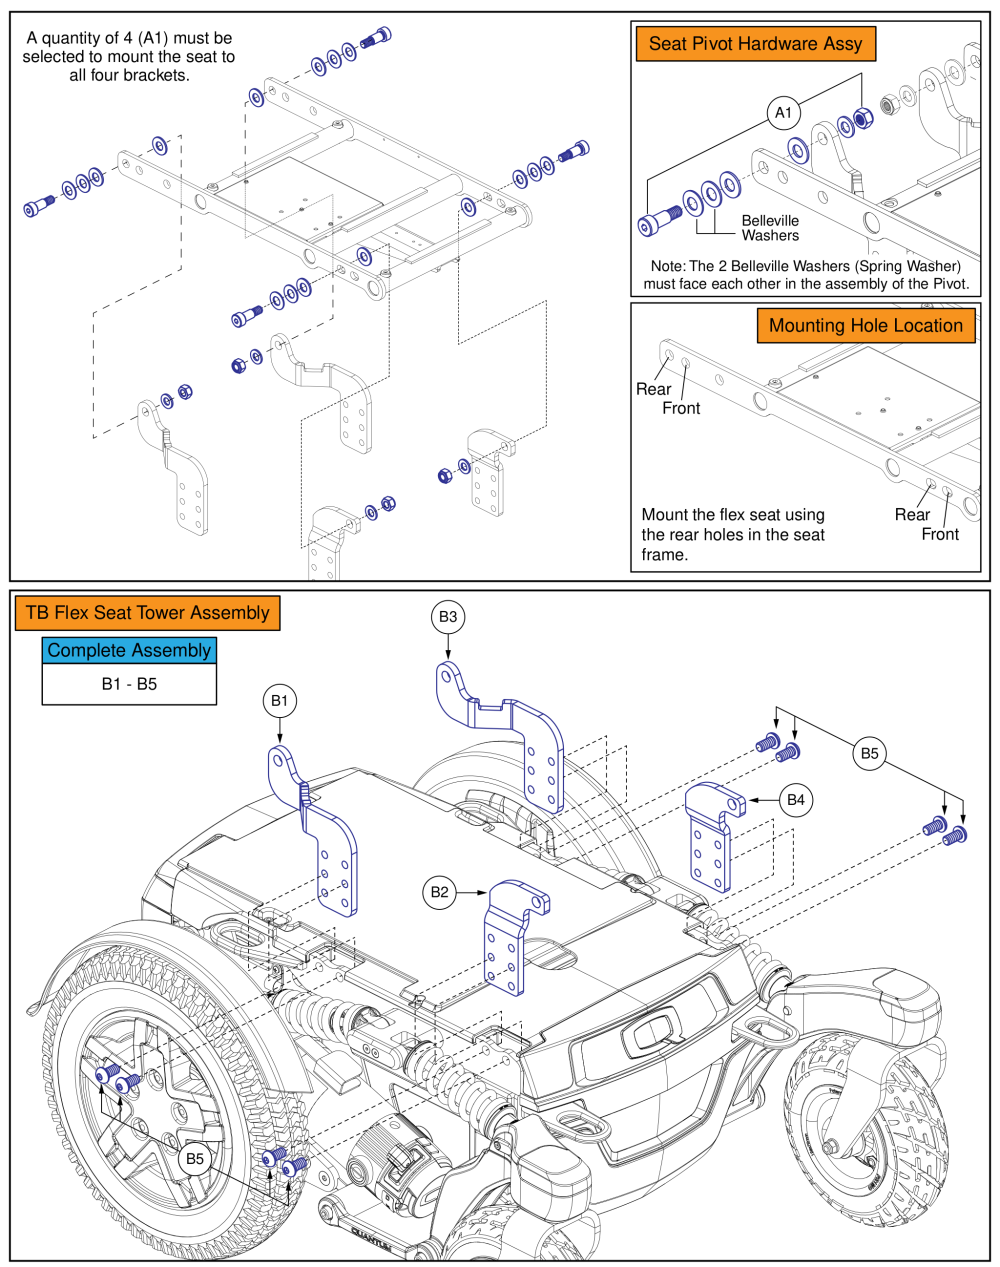 Tb Flex Static Seat Interface, R-trak parts diagram